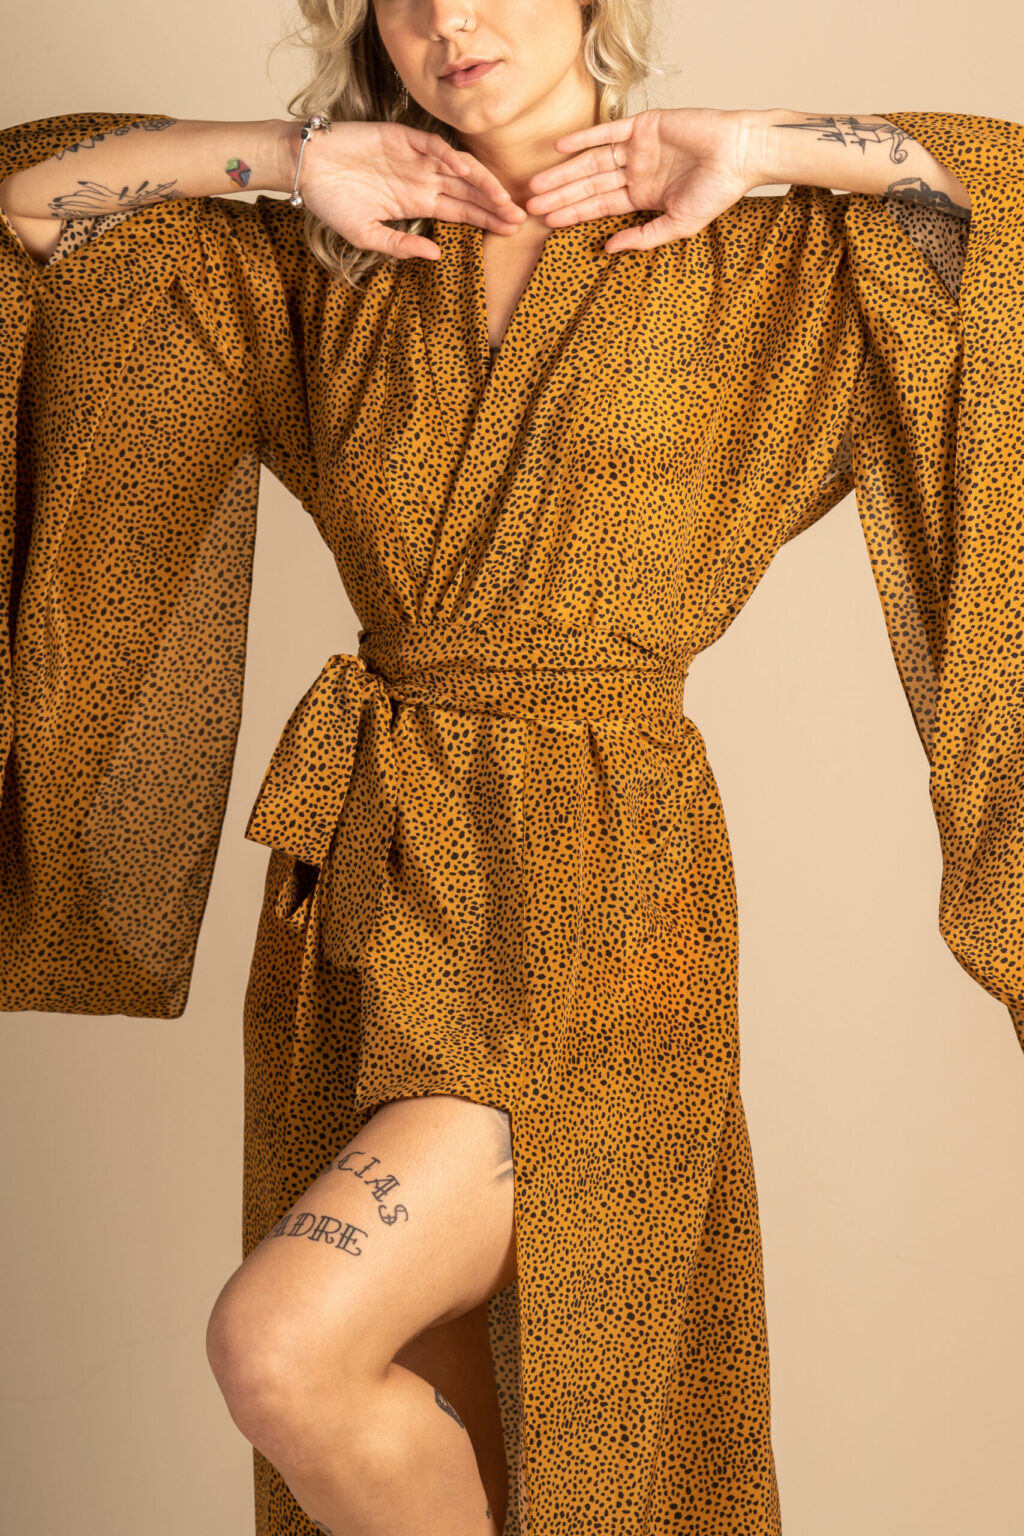 Mulher loira usando kimono longo manga longa com faixa na cintura estampa exclusiva conforto praticidade seda maria sanz kimono quimono